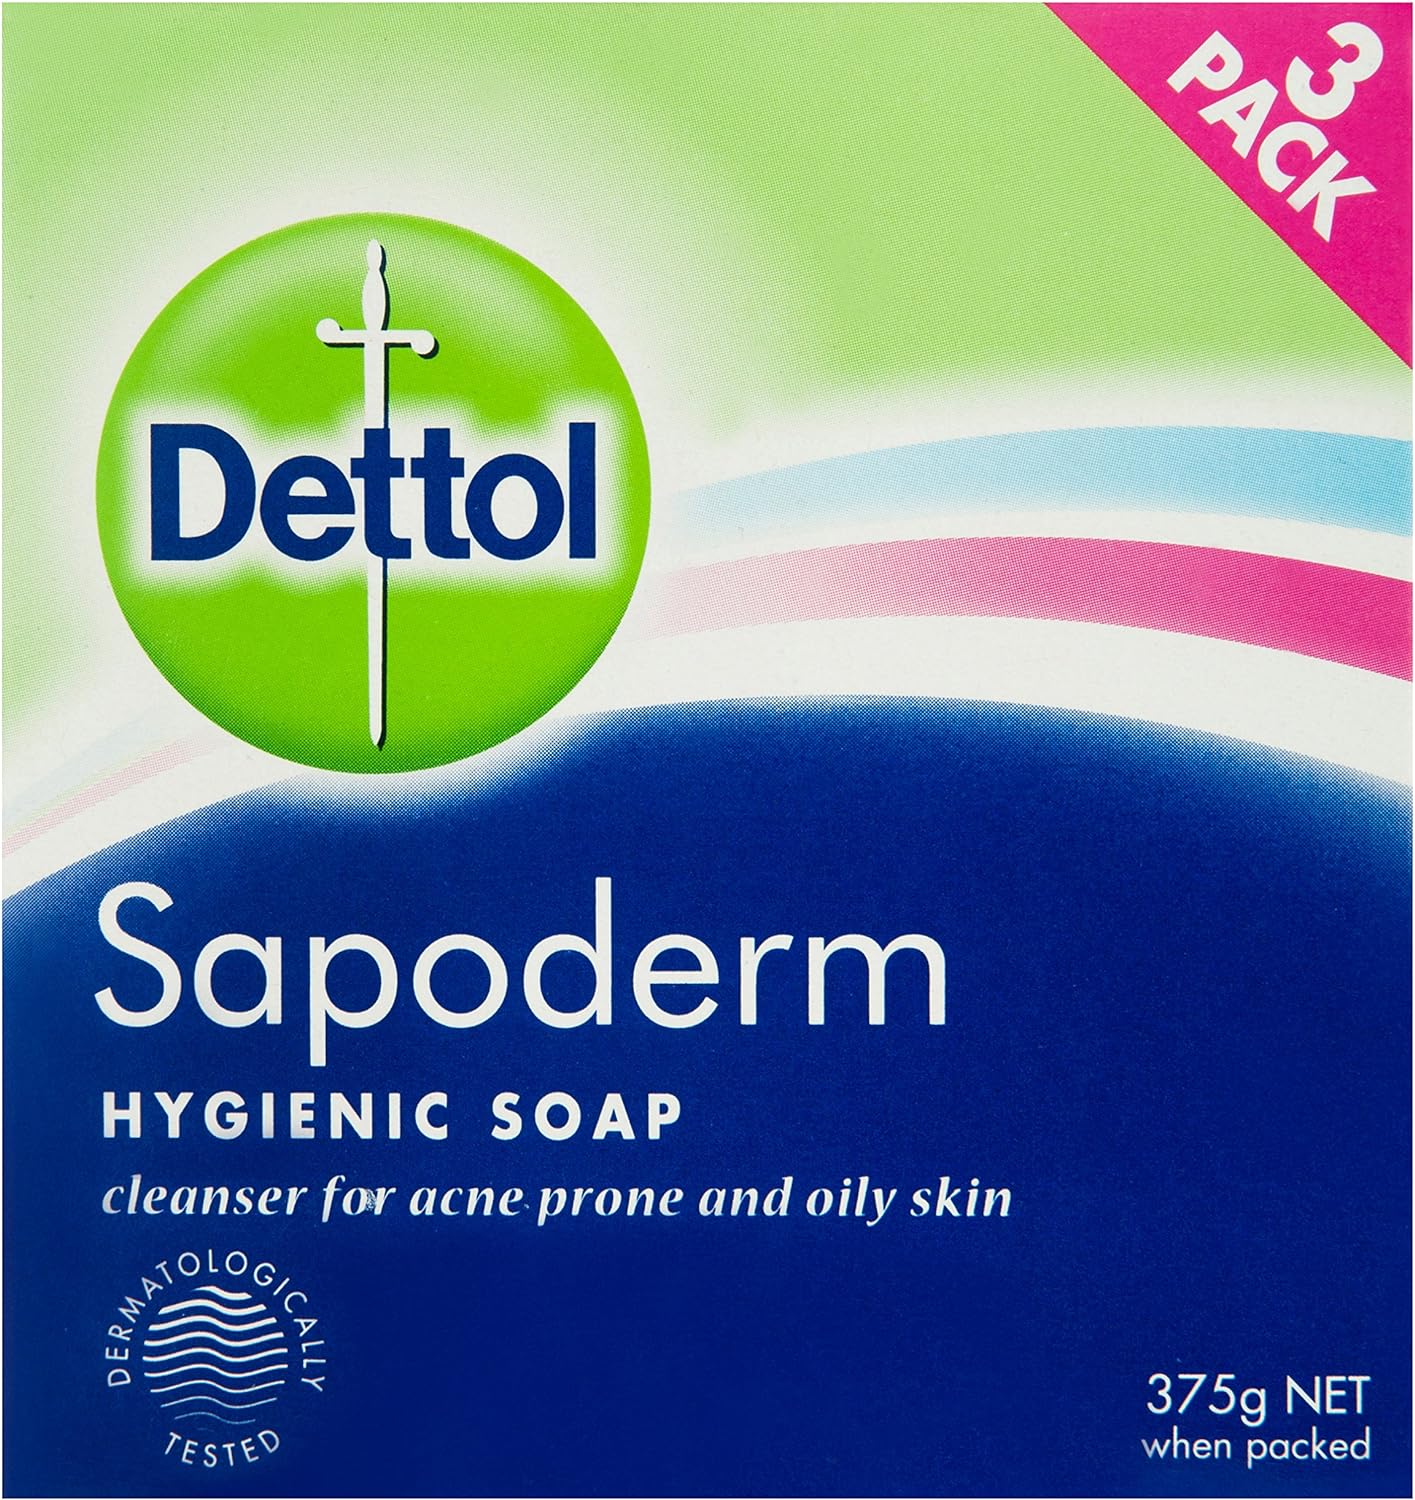 Dettol Sapoderm Medicated Soap 3pk 375g